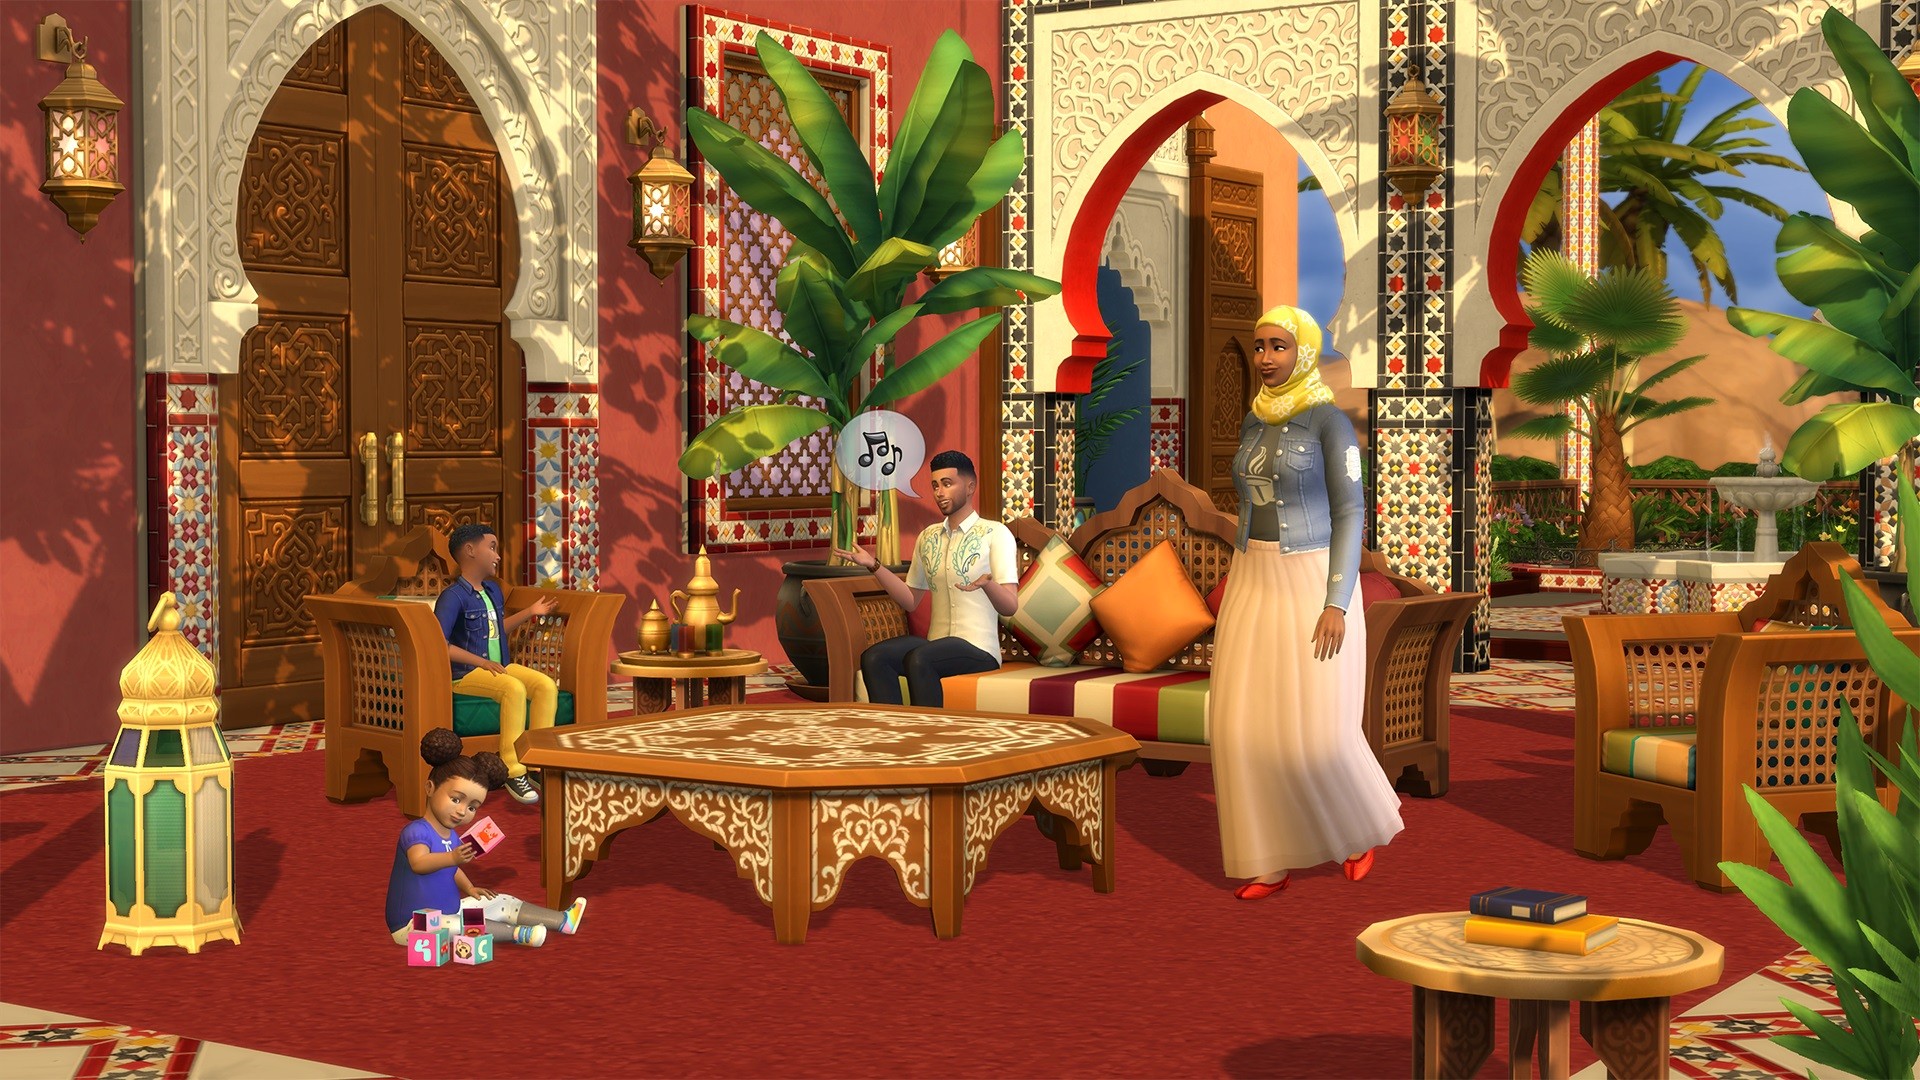 The Sims 4 - Courtyard Oasis Kit DLC Origin CD Key